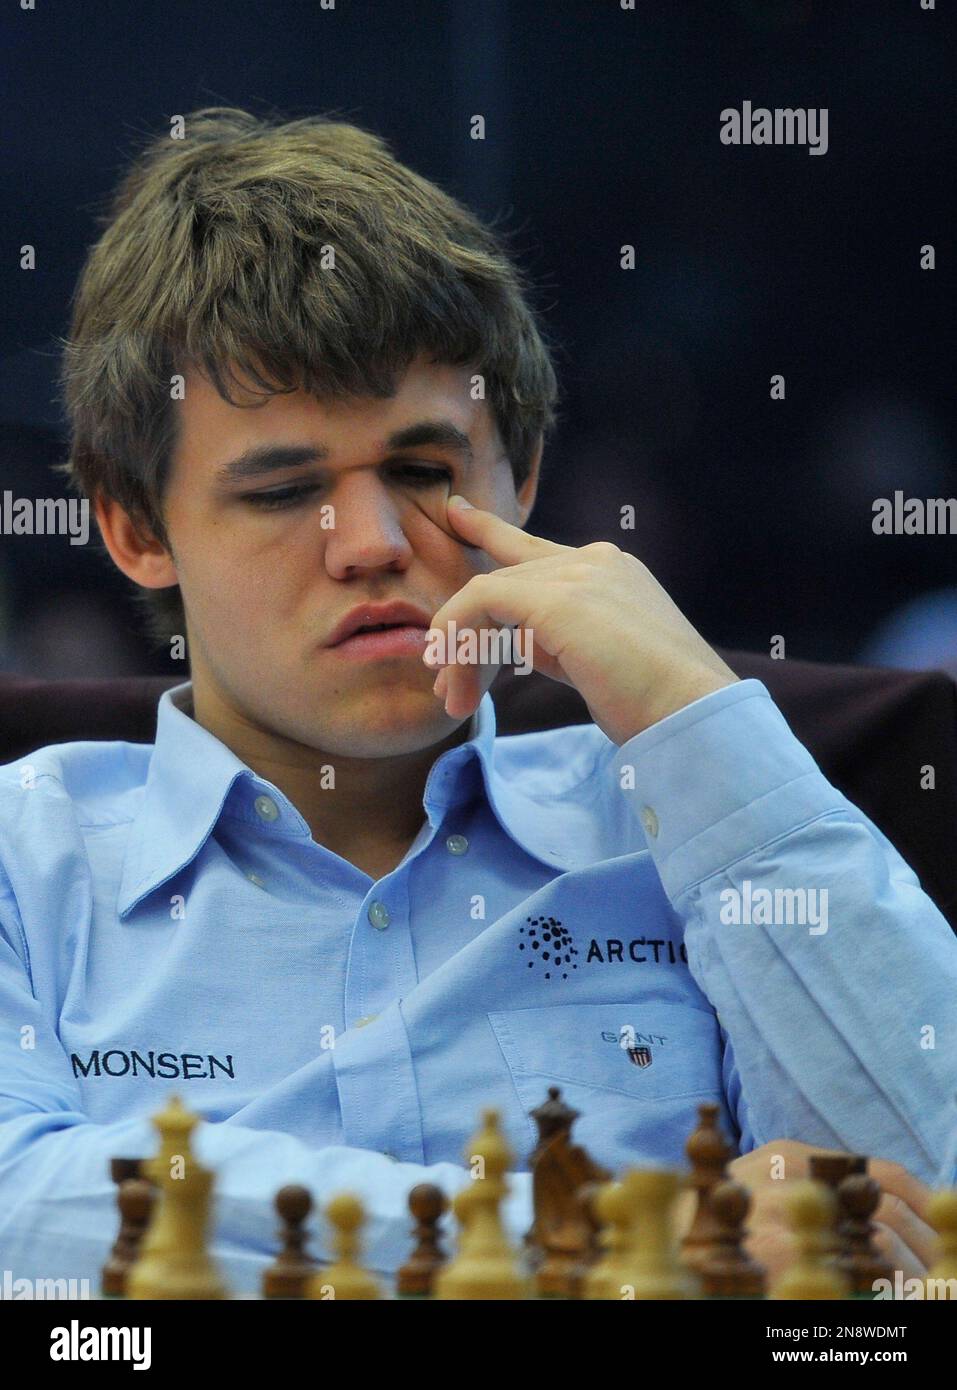 R Praggnanandhaa won Norway Chess Group A open chess tournament